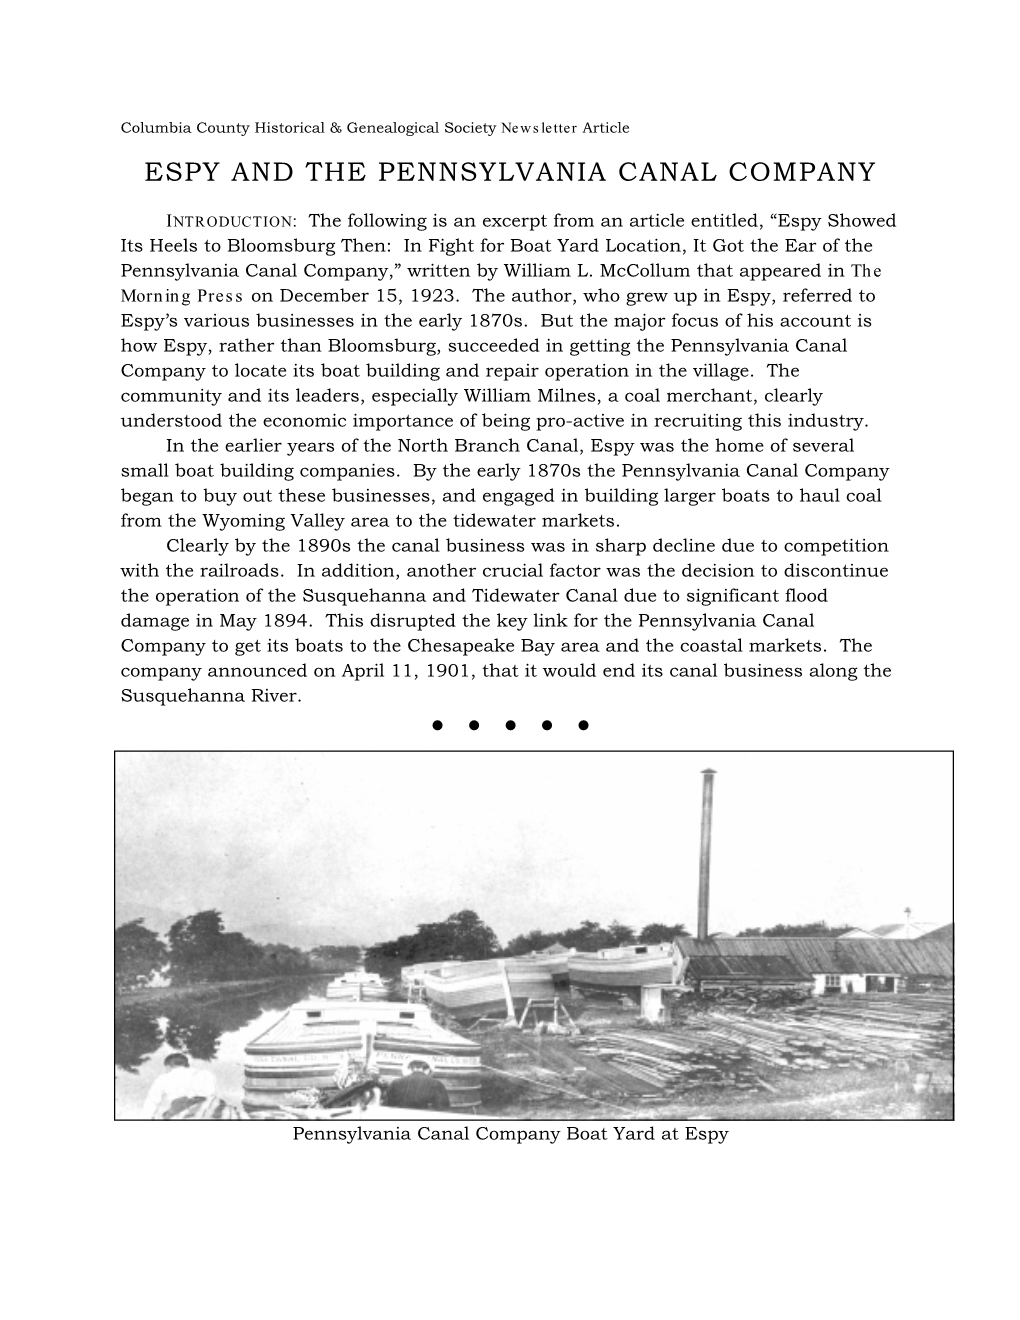 Espy and the Pennsylvania Canal Company